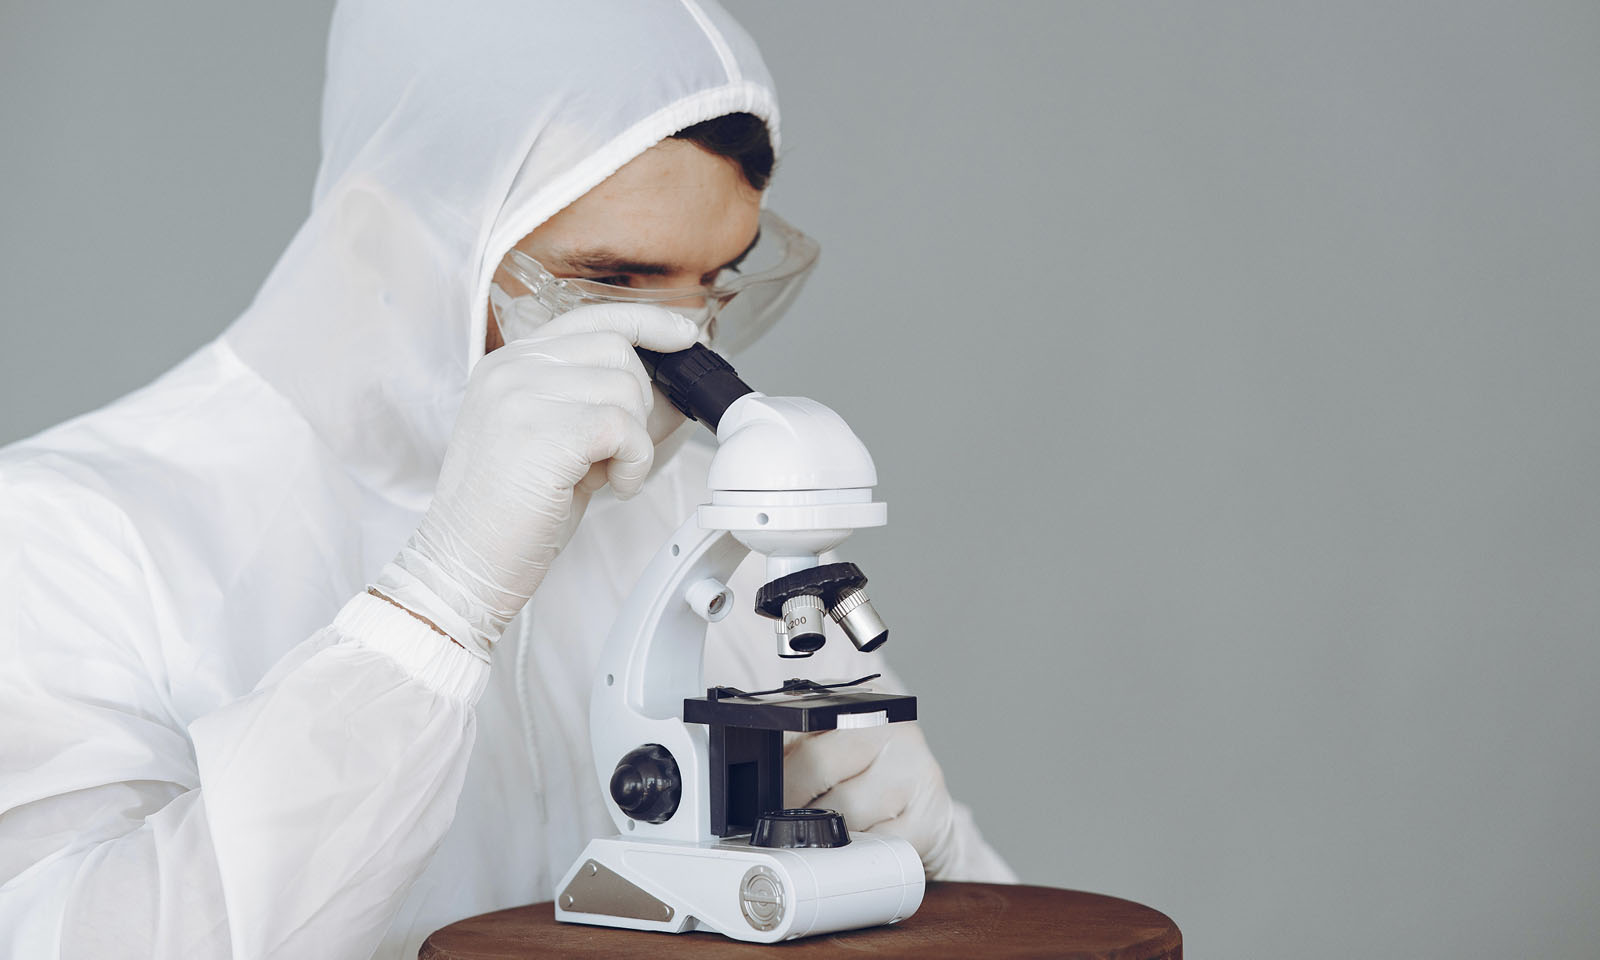 Scientist looks into a microscope